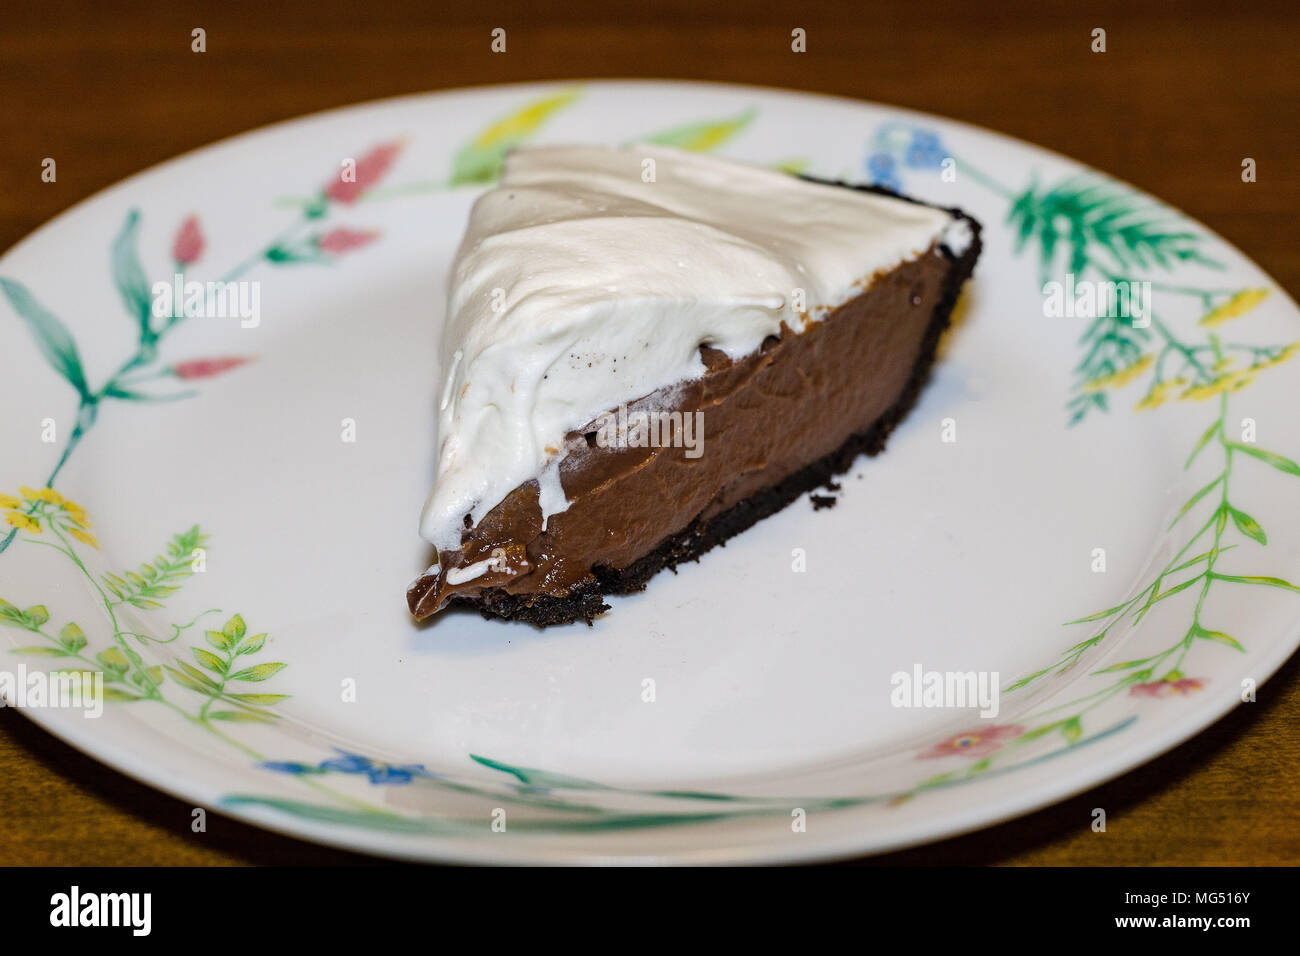 serving up homemade chocolate pie for desert Stock Photo